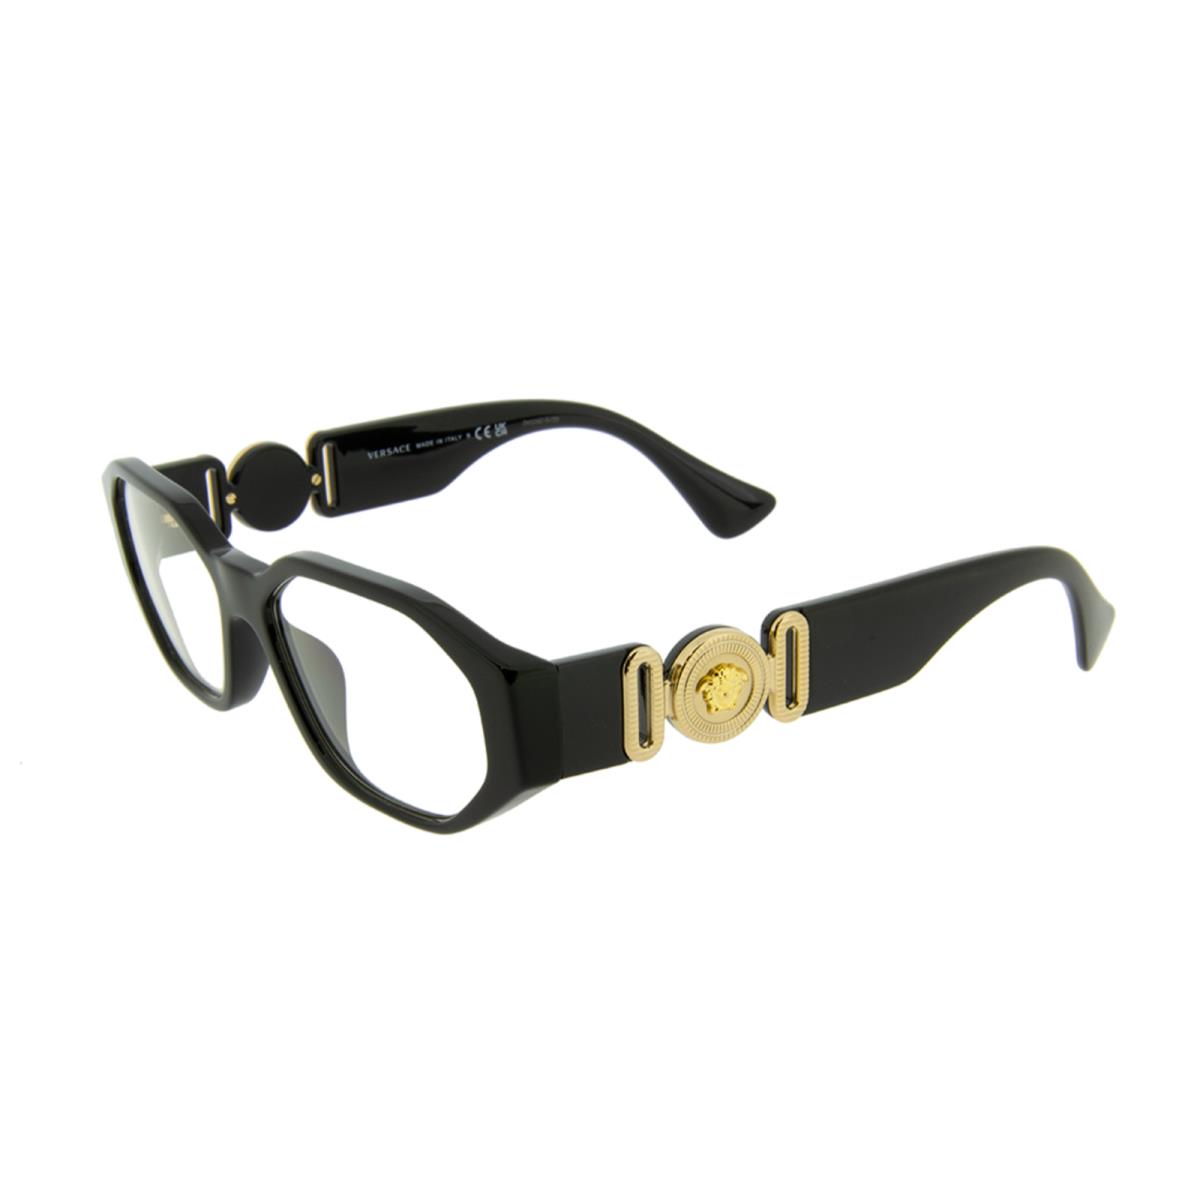 Versace Fashion Eyeglasses Mod. 3320-U GB1 56-16 Black w/ Gold Medusa Frames - Black Frame, Demos with Logo Imprint Lens